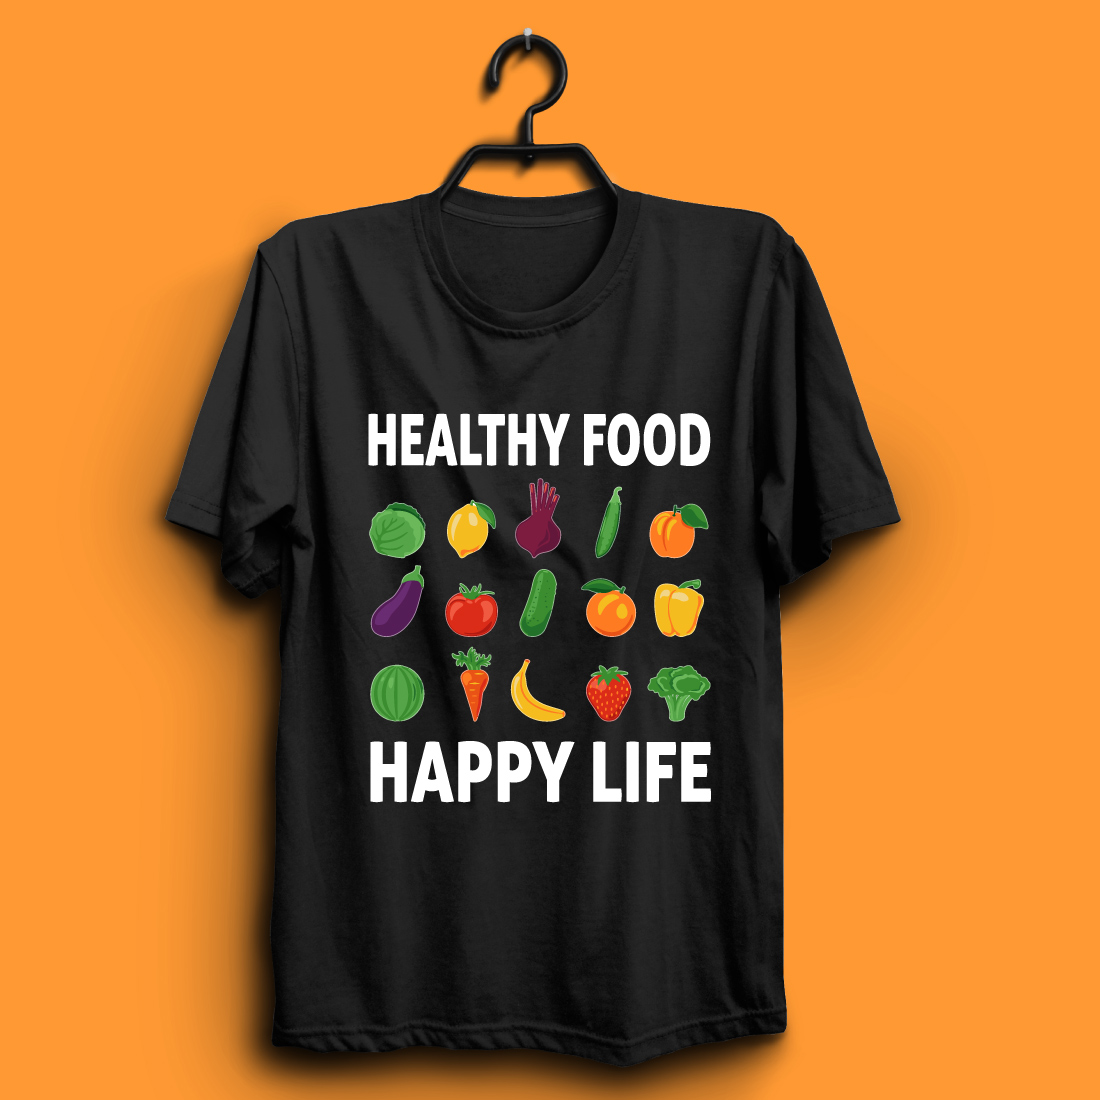 food t shirt design02 915